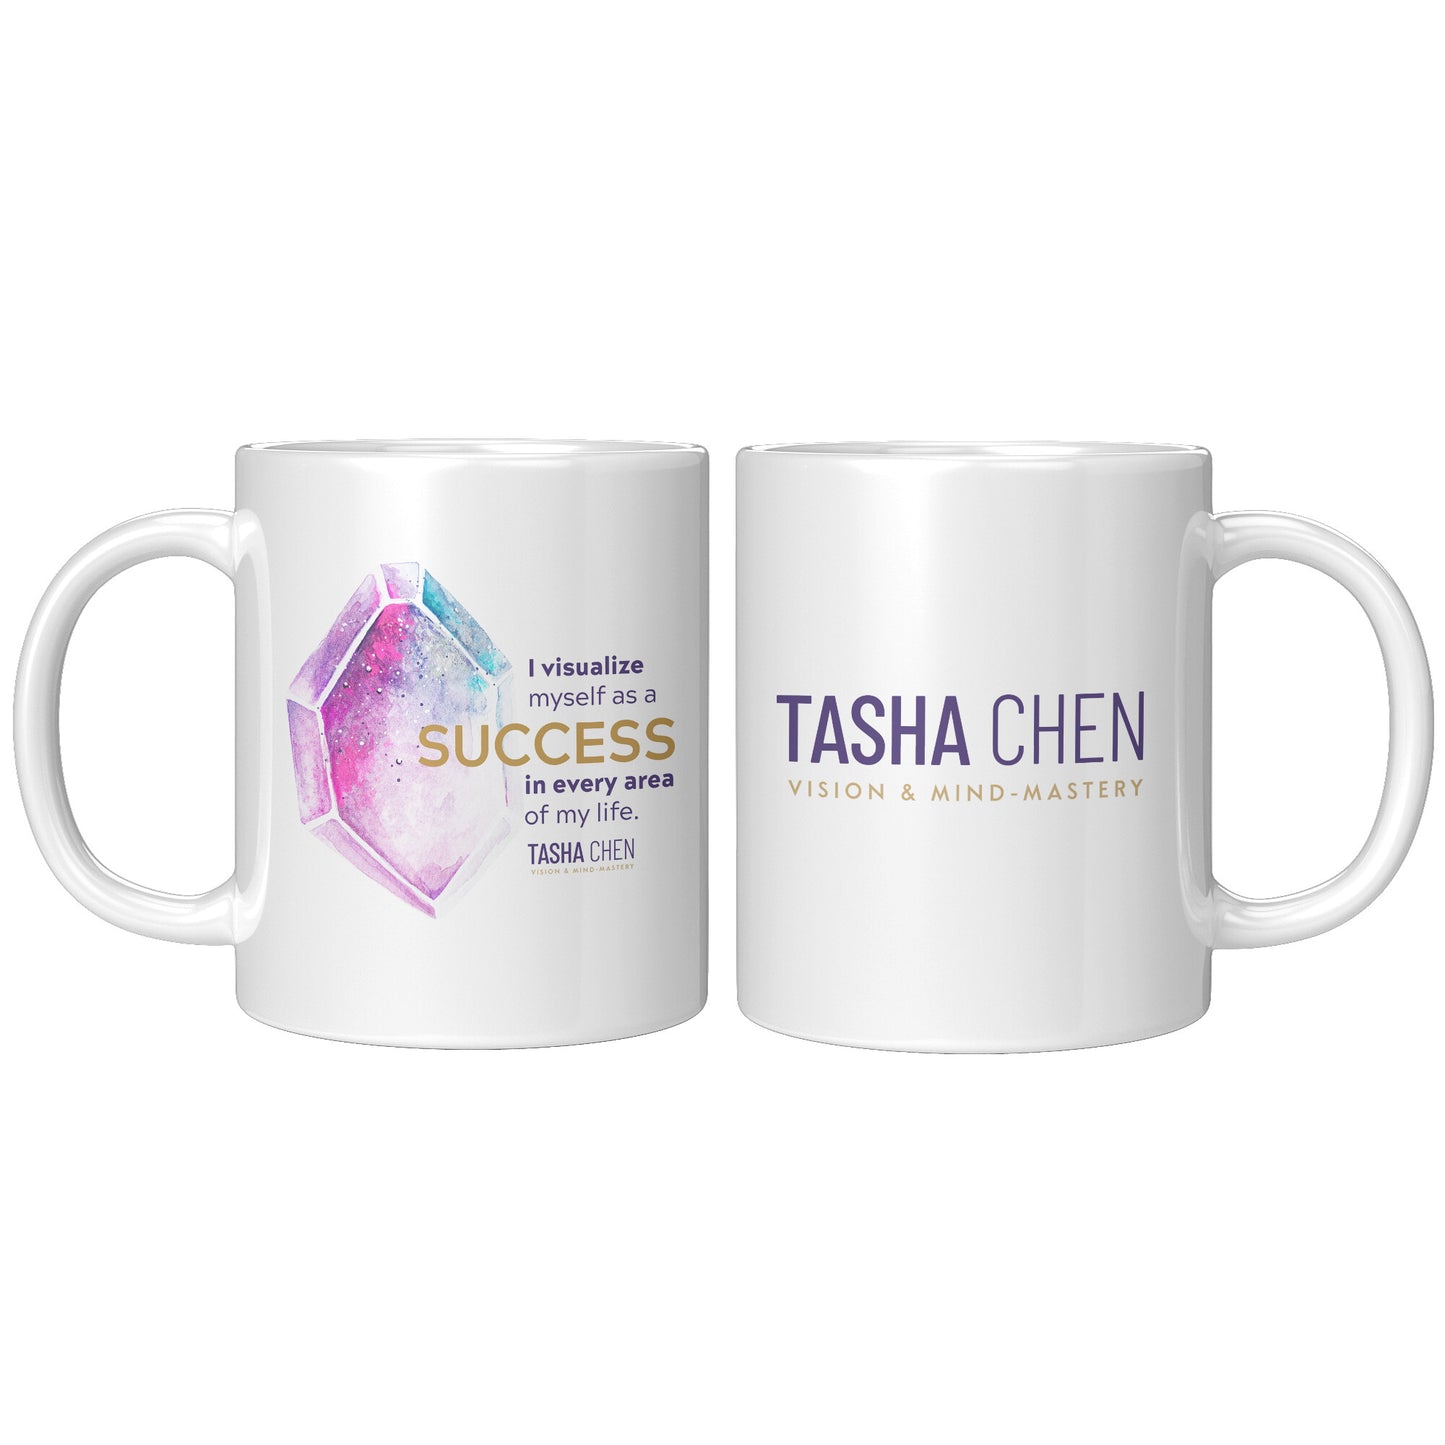 Visualize Success Mug